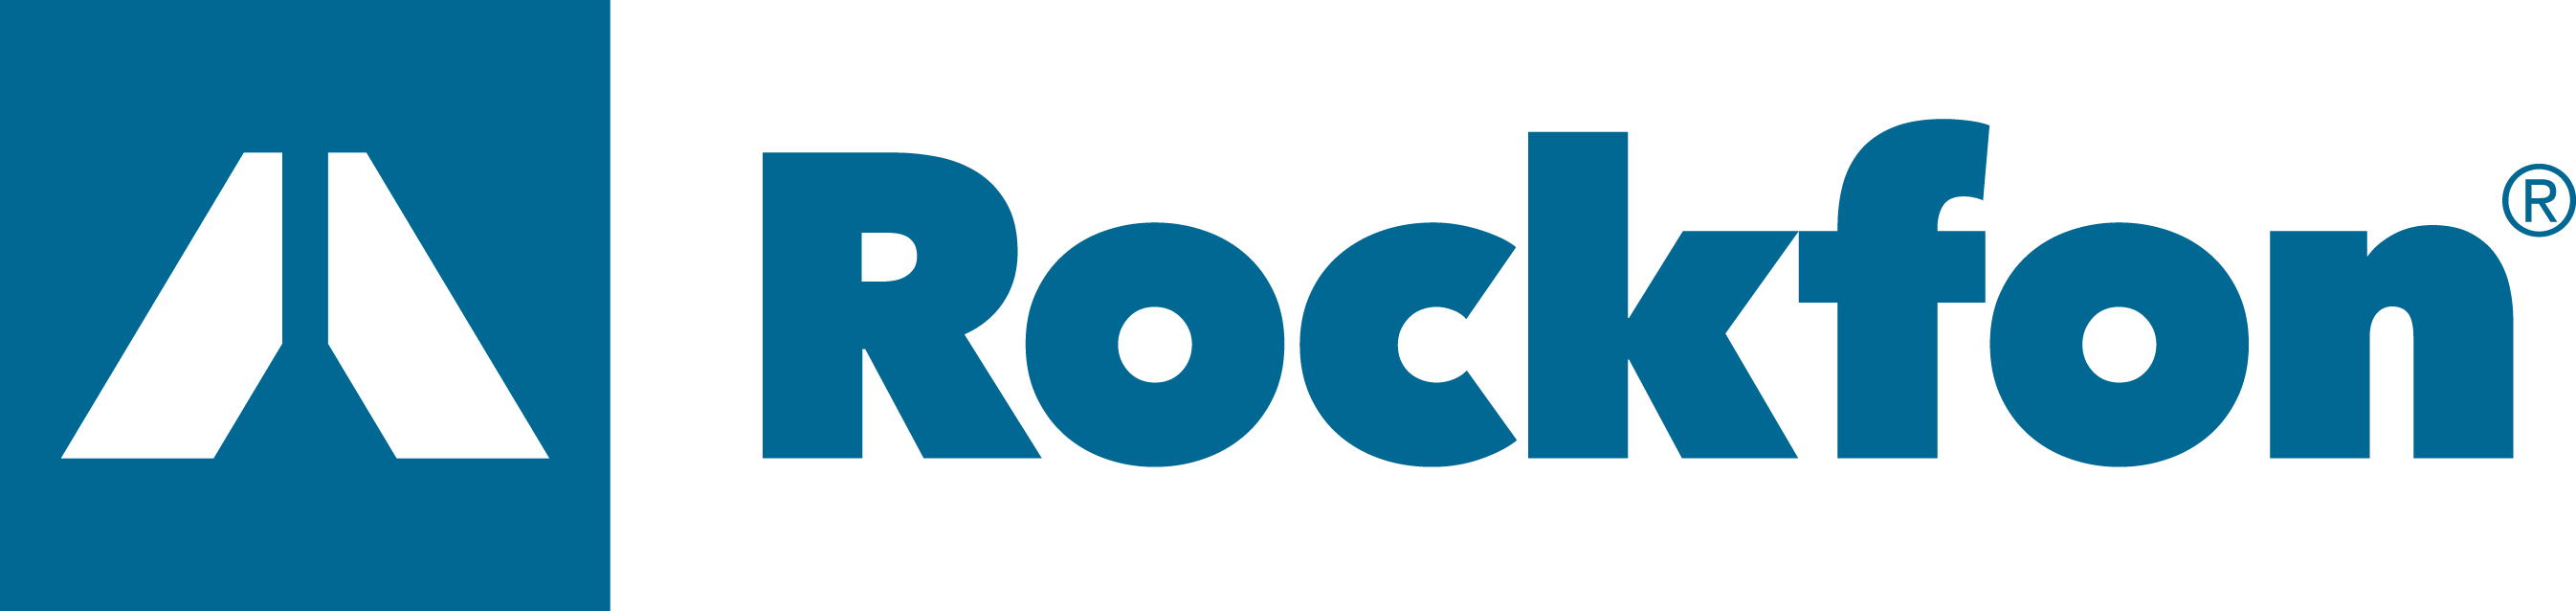 rockfon logo blue